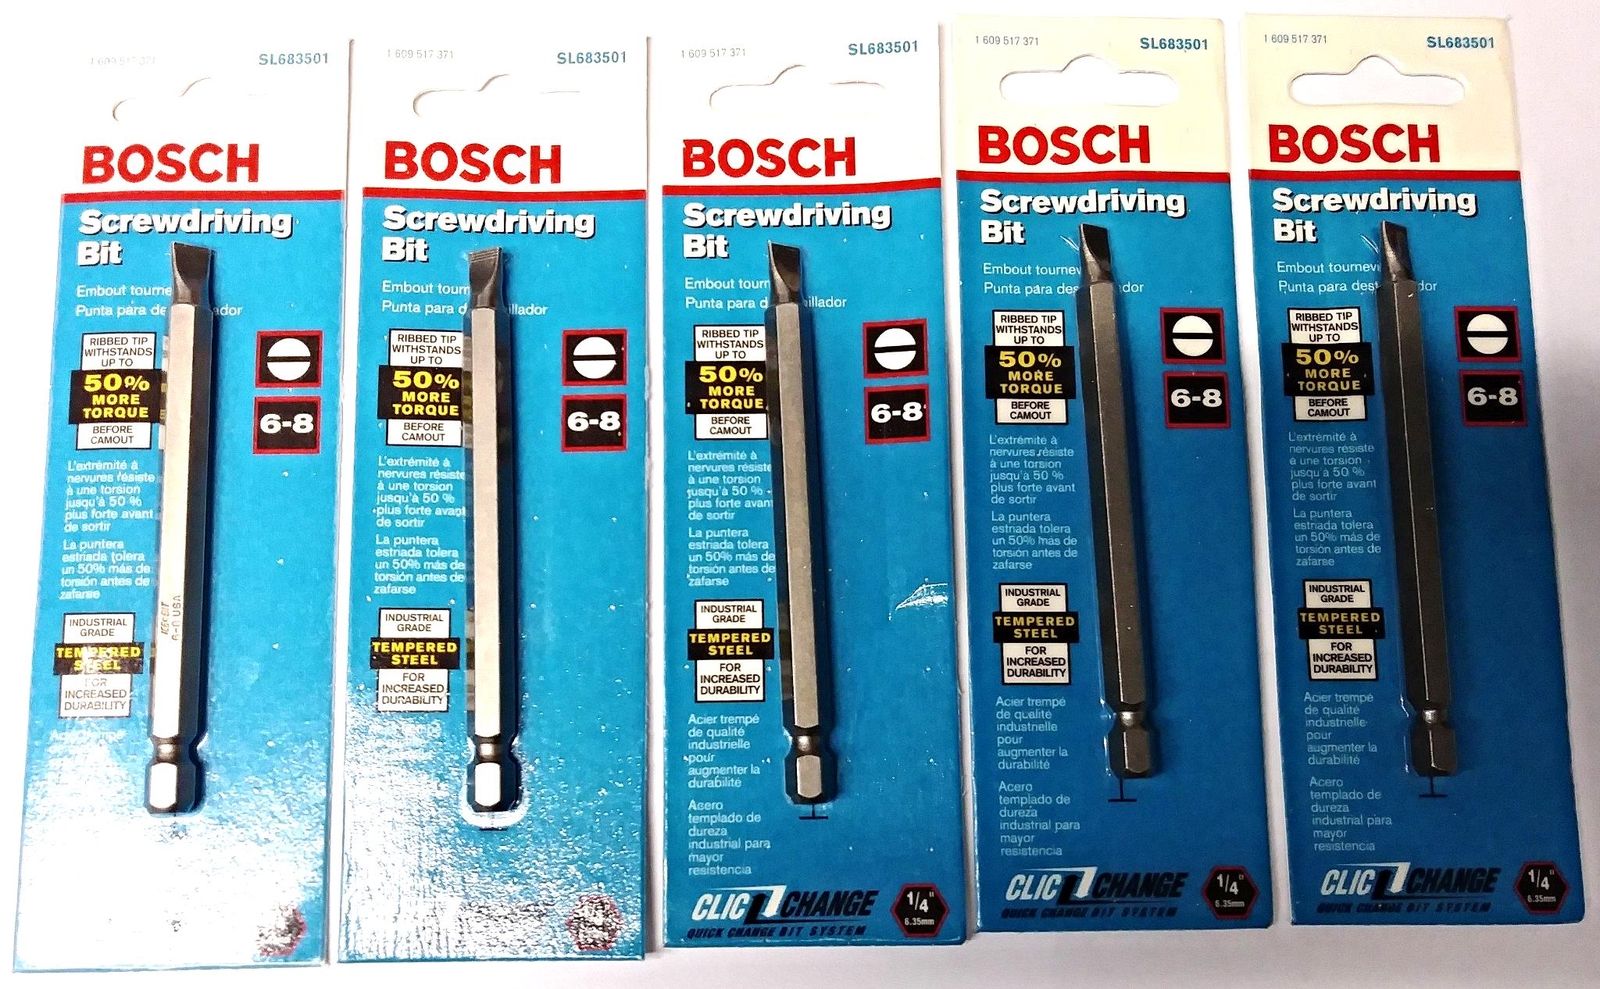 Bosch SL683501 Clic Change 6-8 Slotted Screwdriving Bit (5 Packs) USA